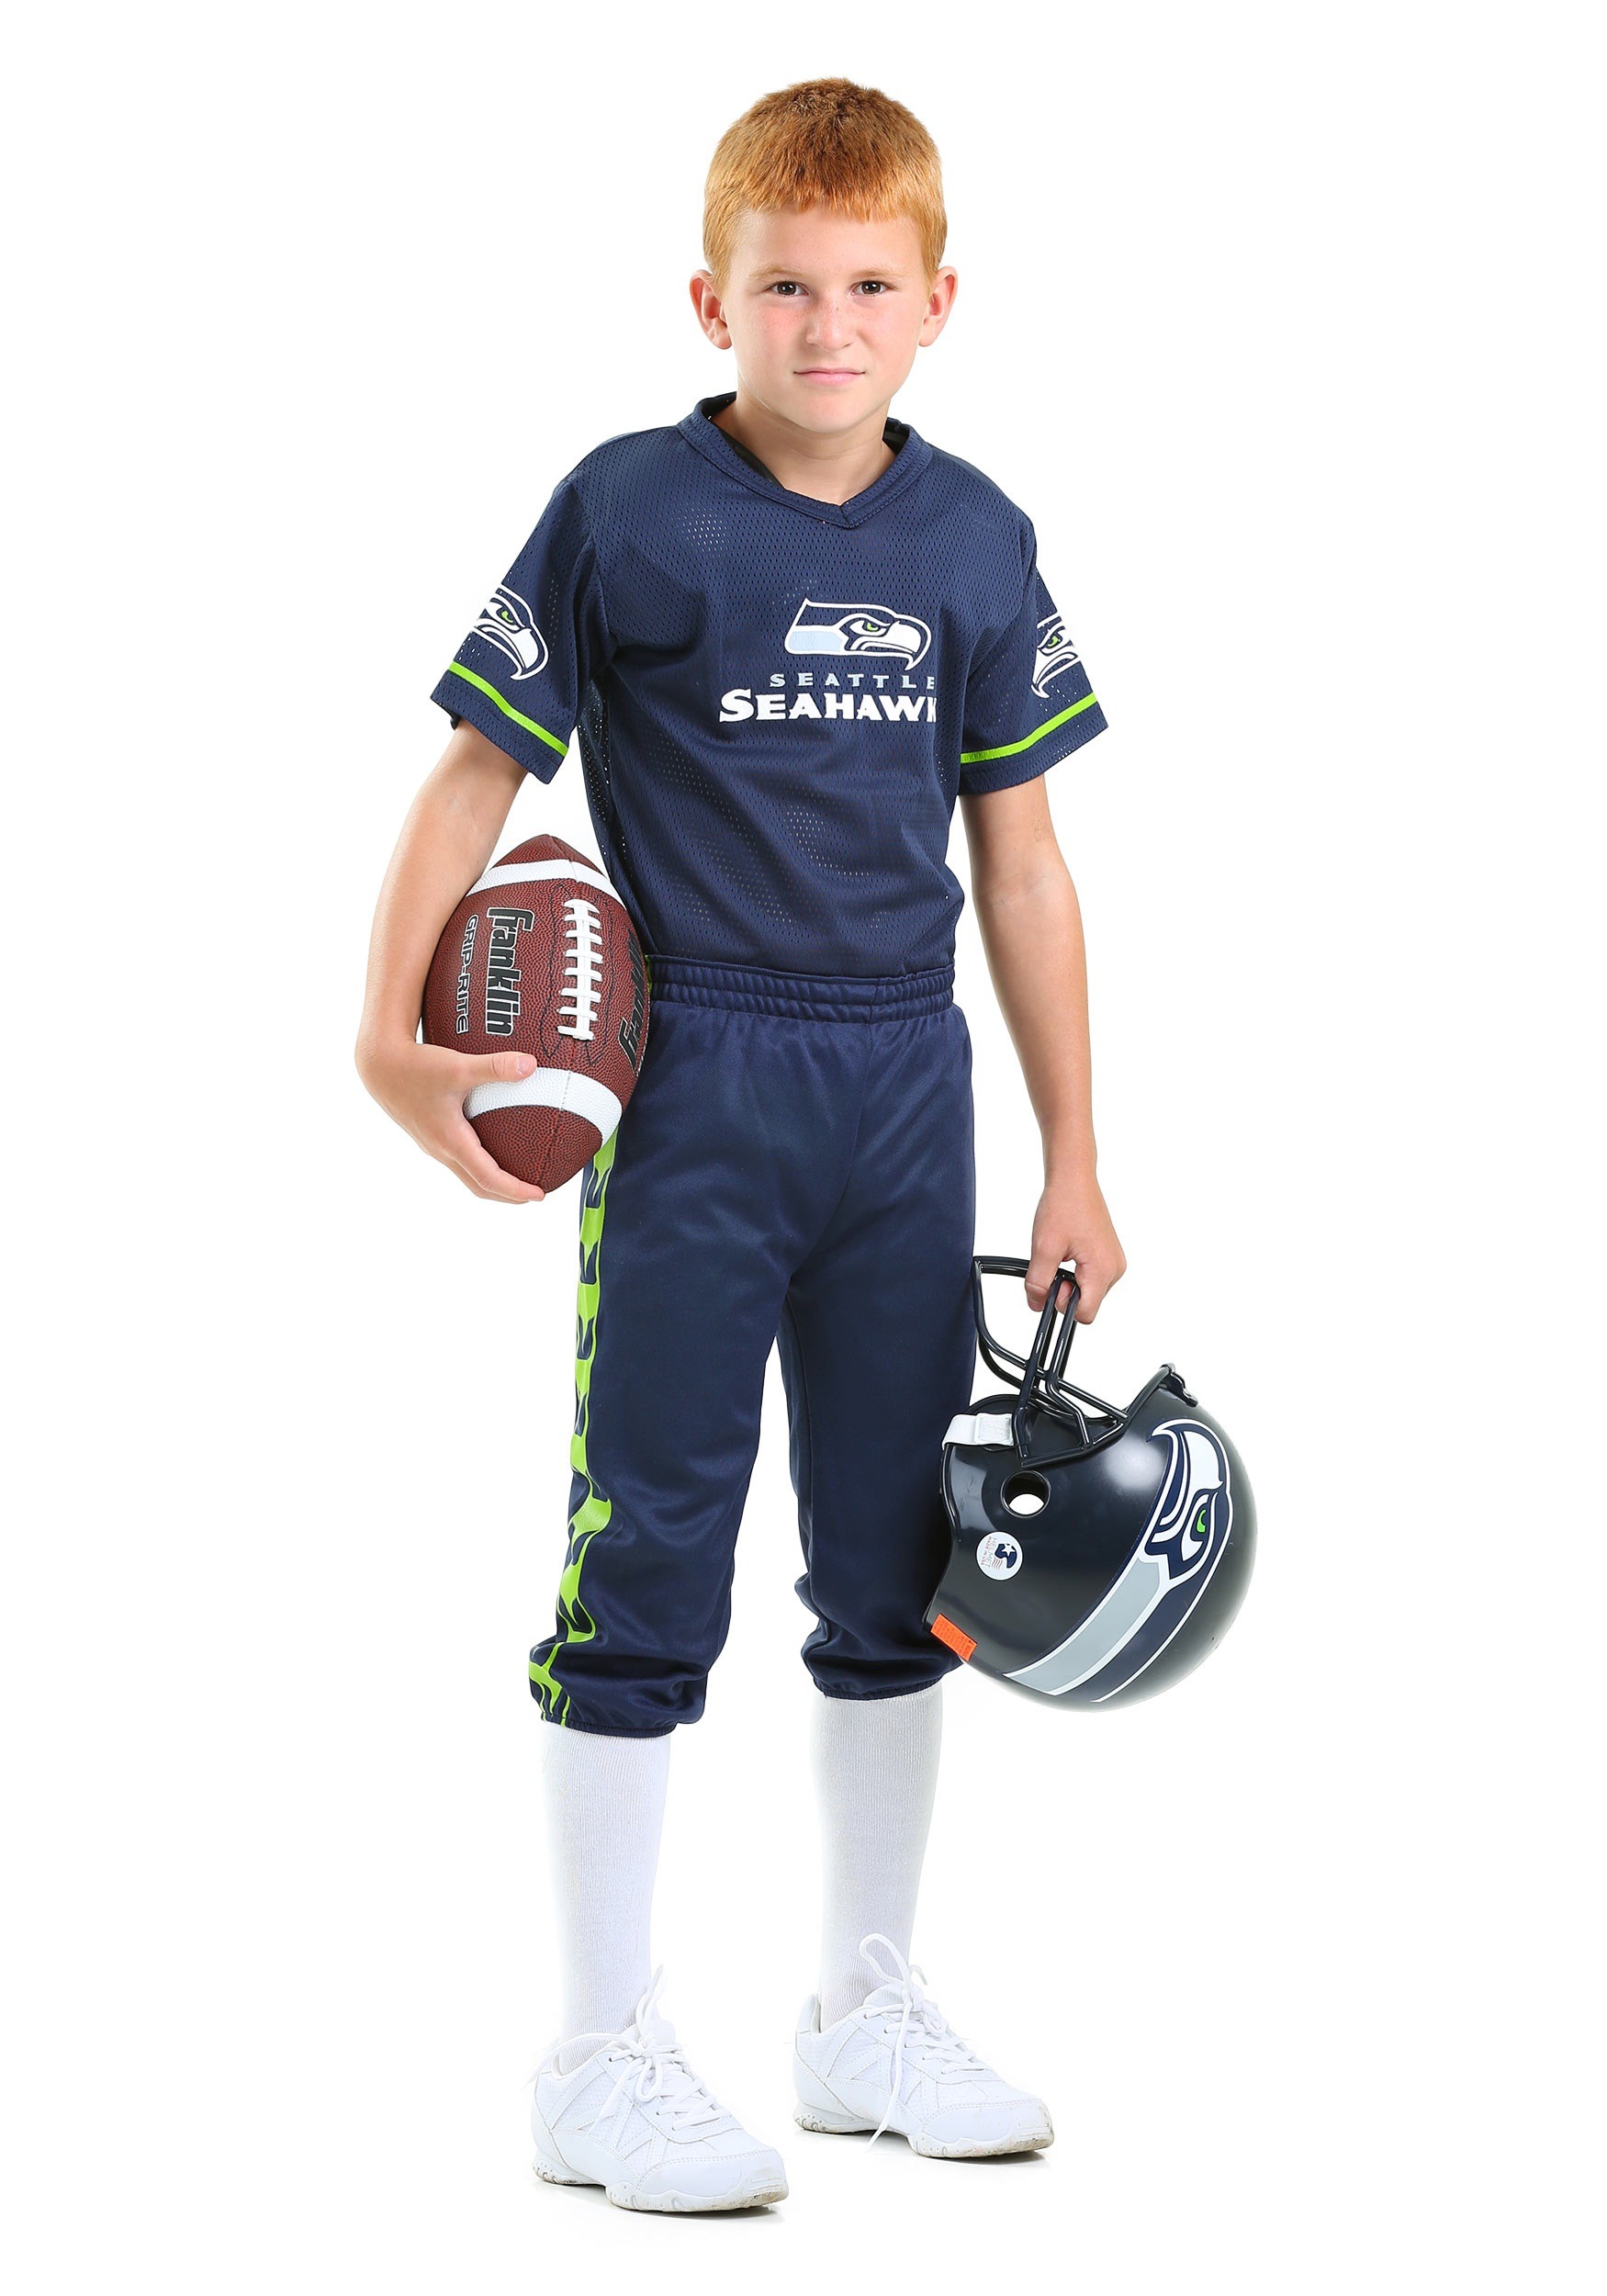 Image of NFL Seahawks Uniform Costume ID FA15700F28-S